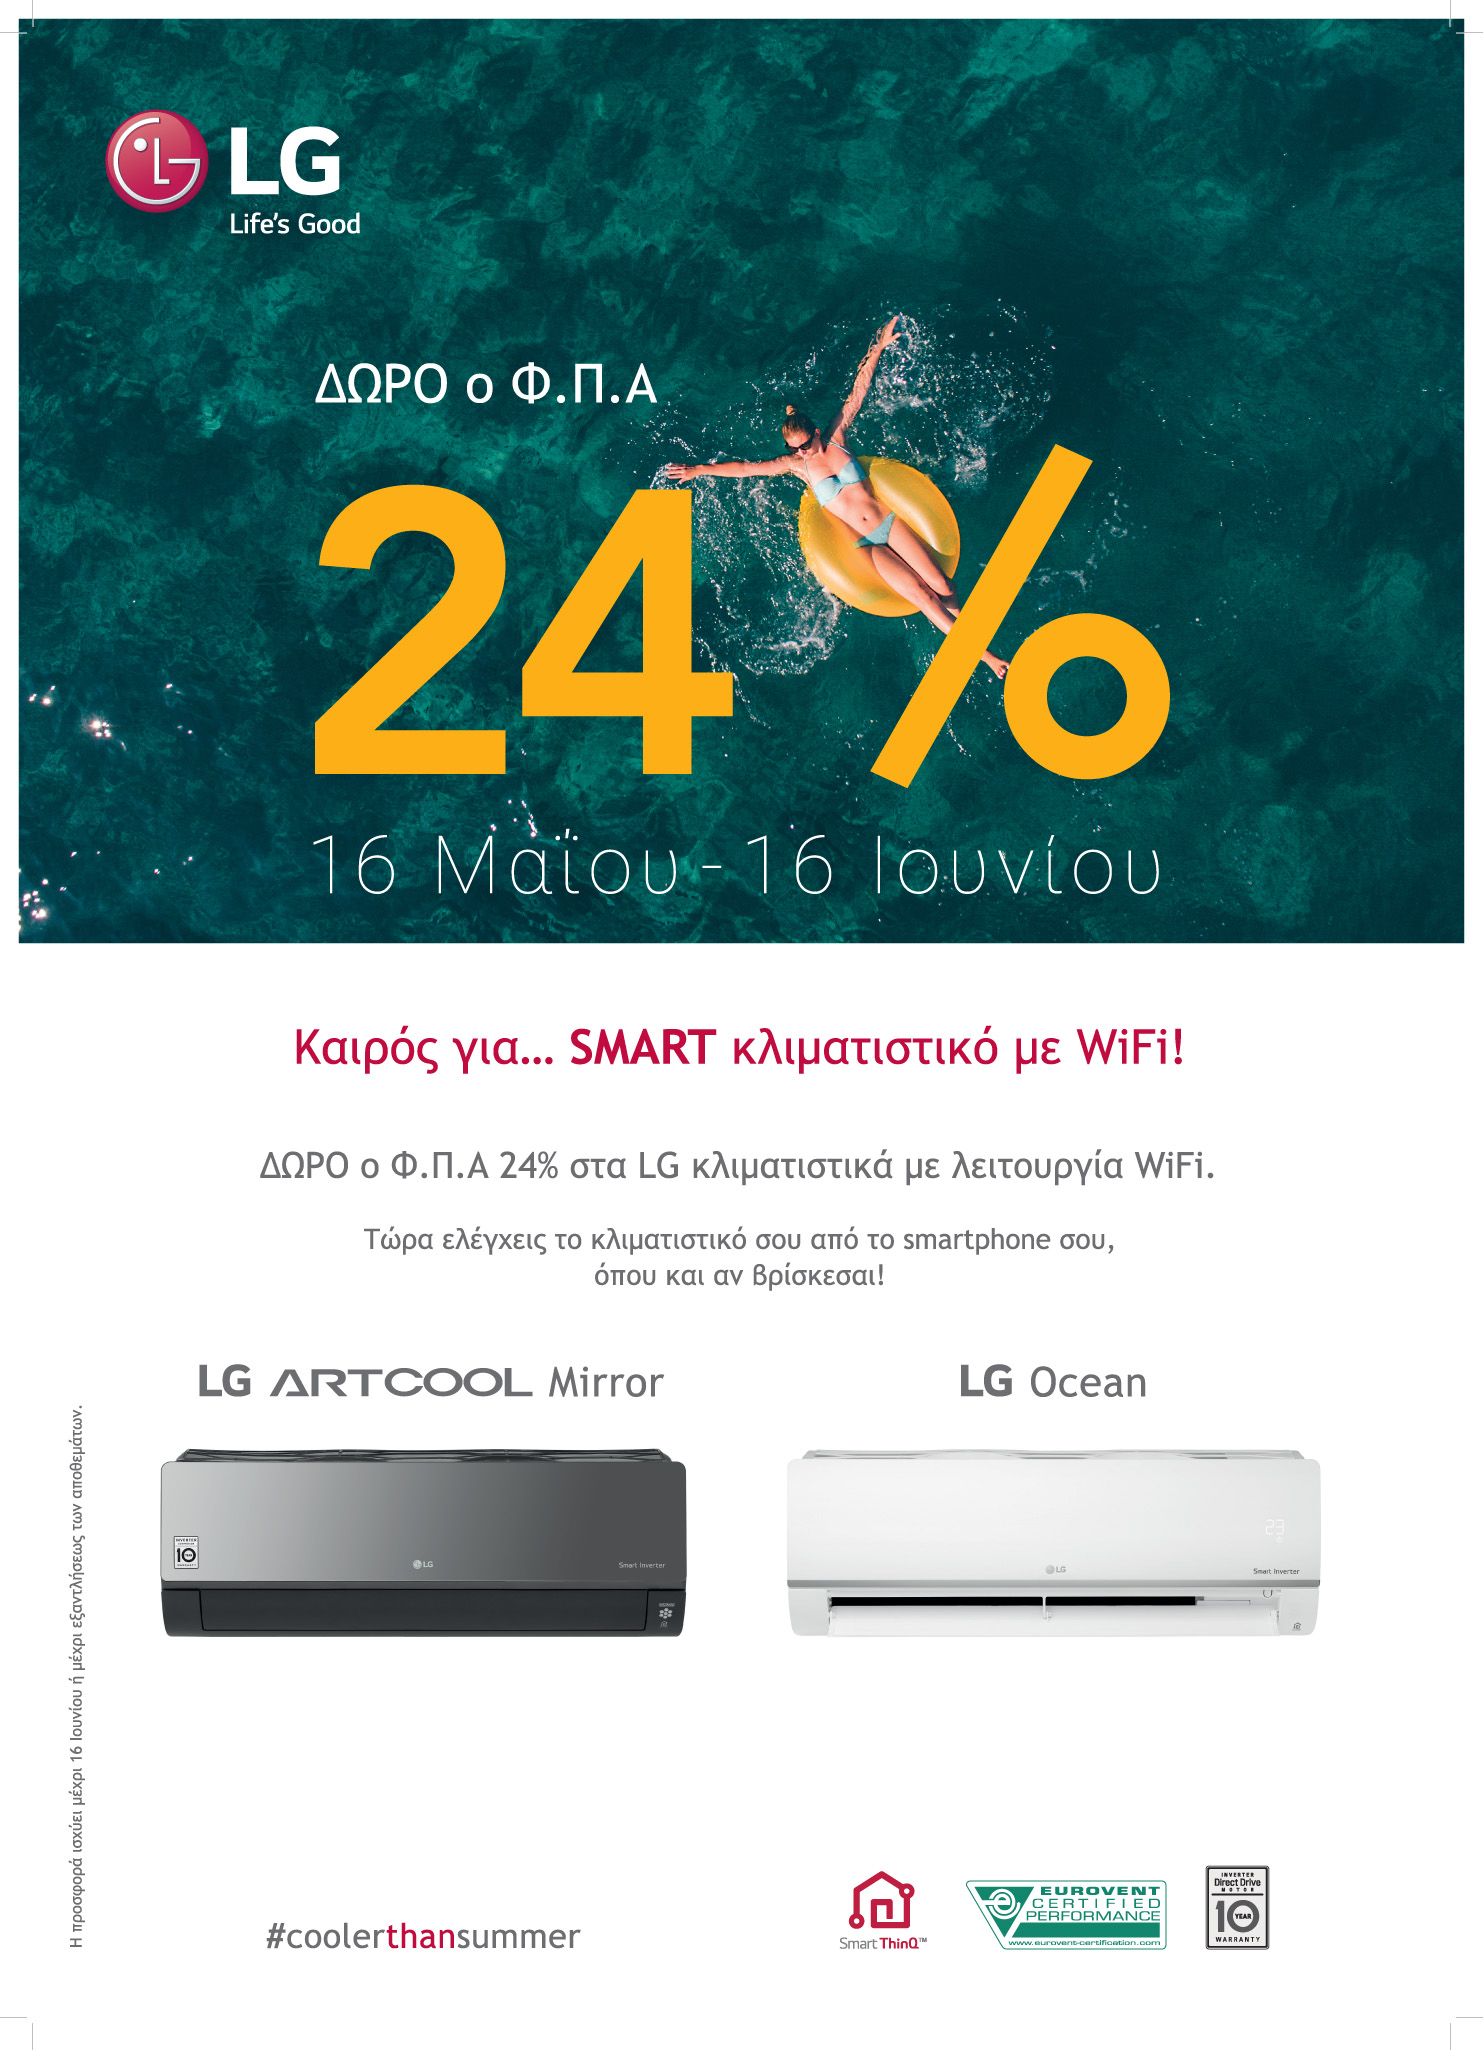 LG Wi-Fi RAC Promotion